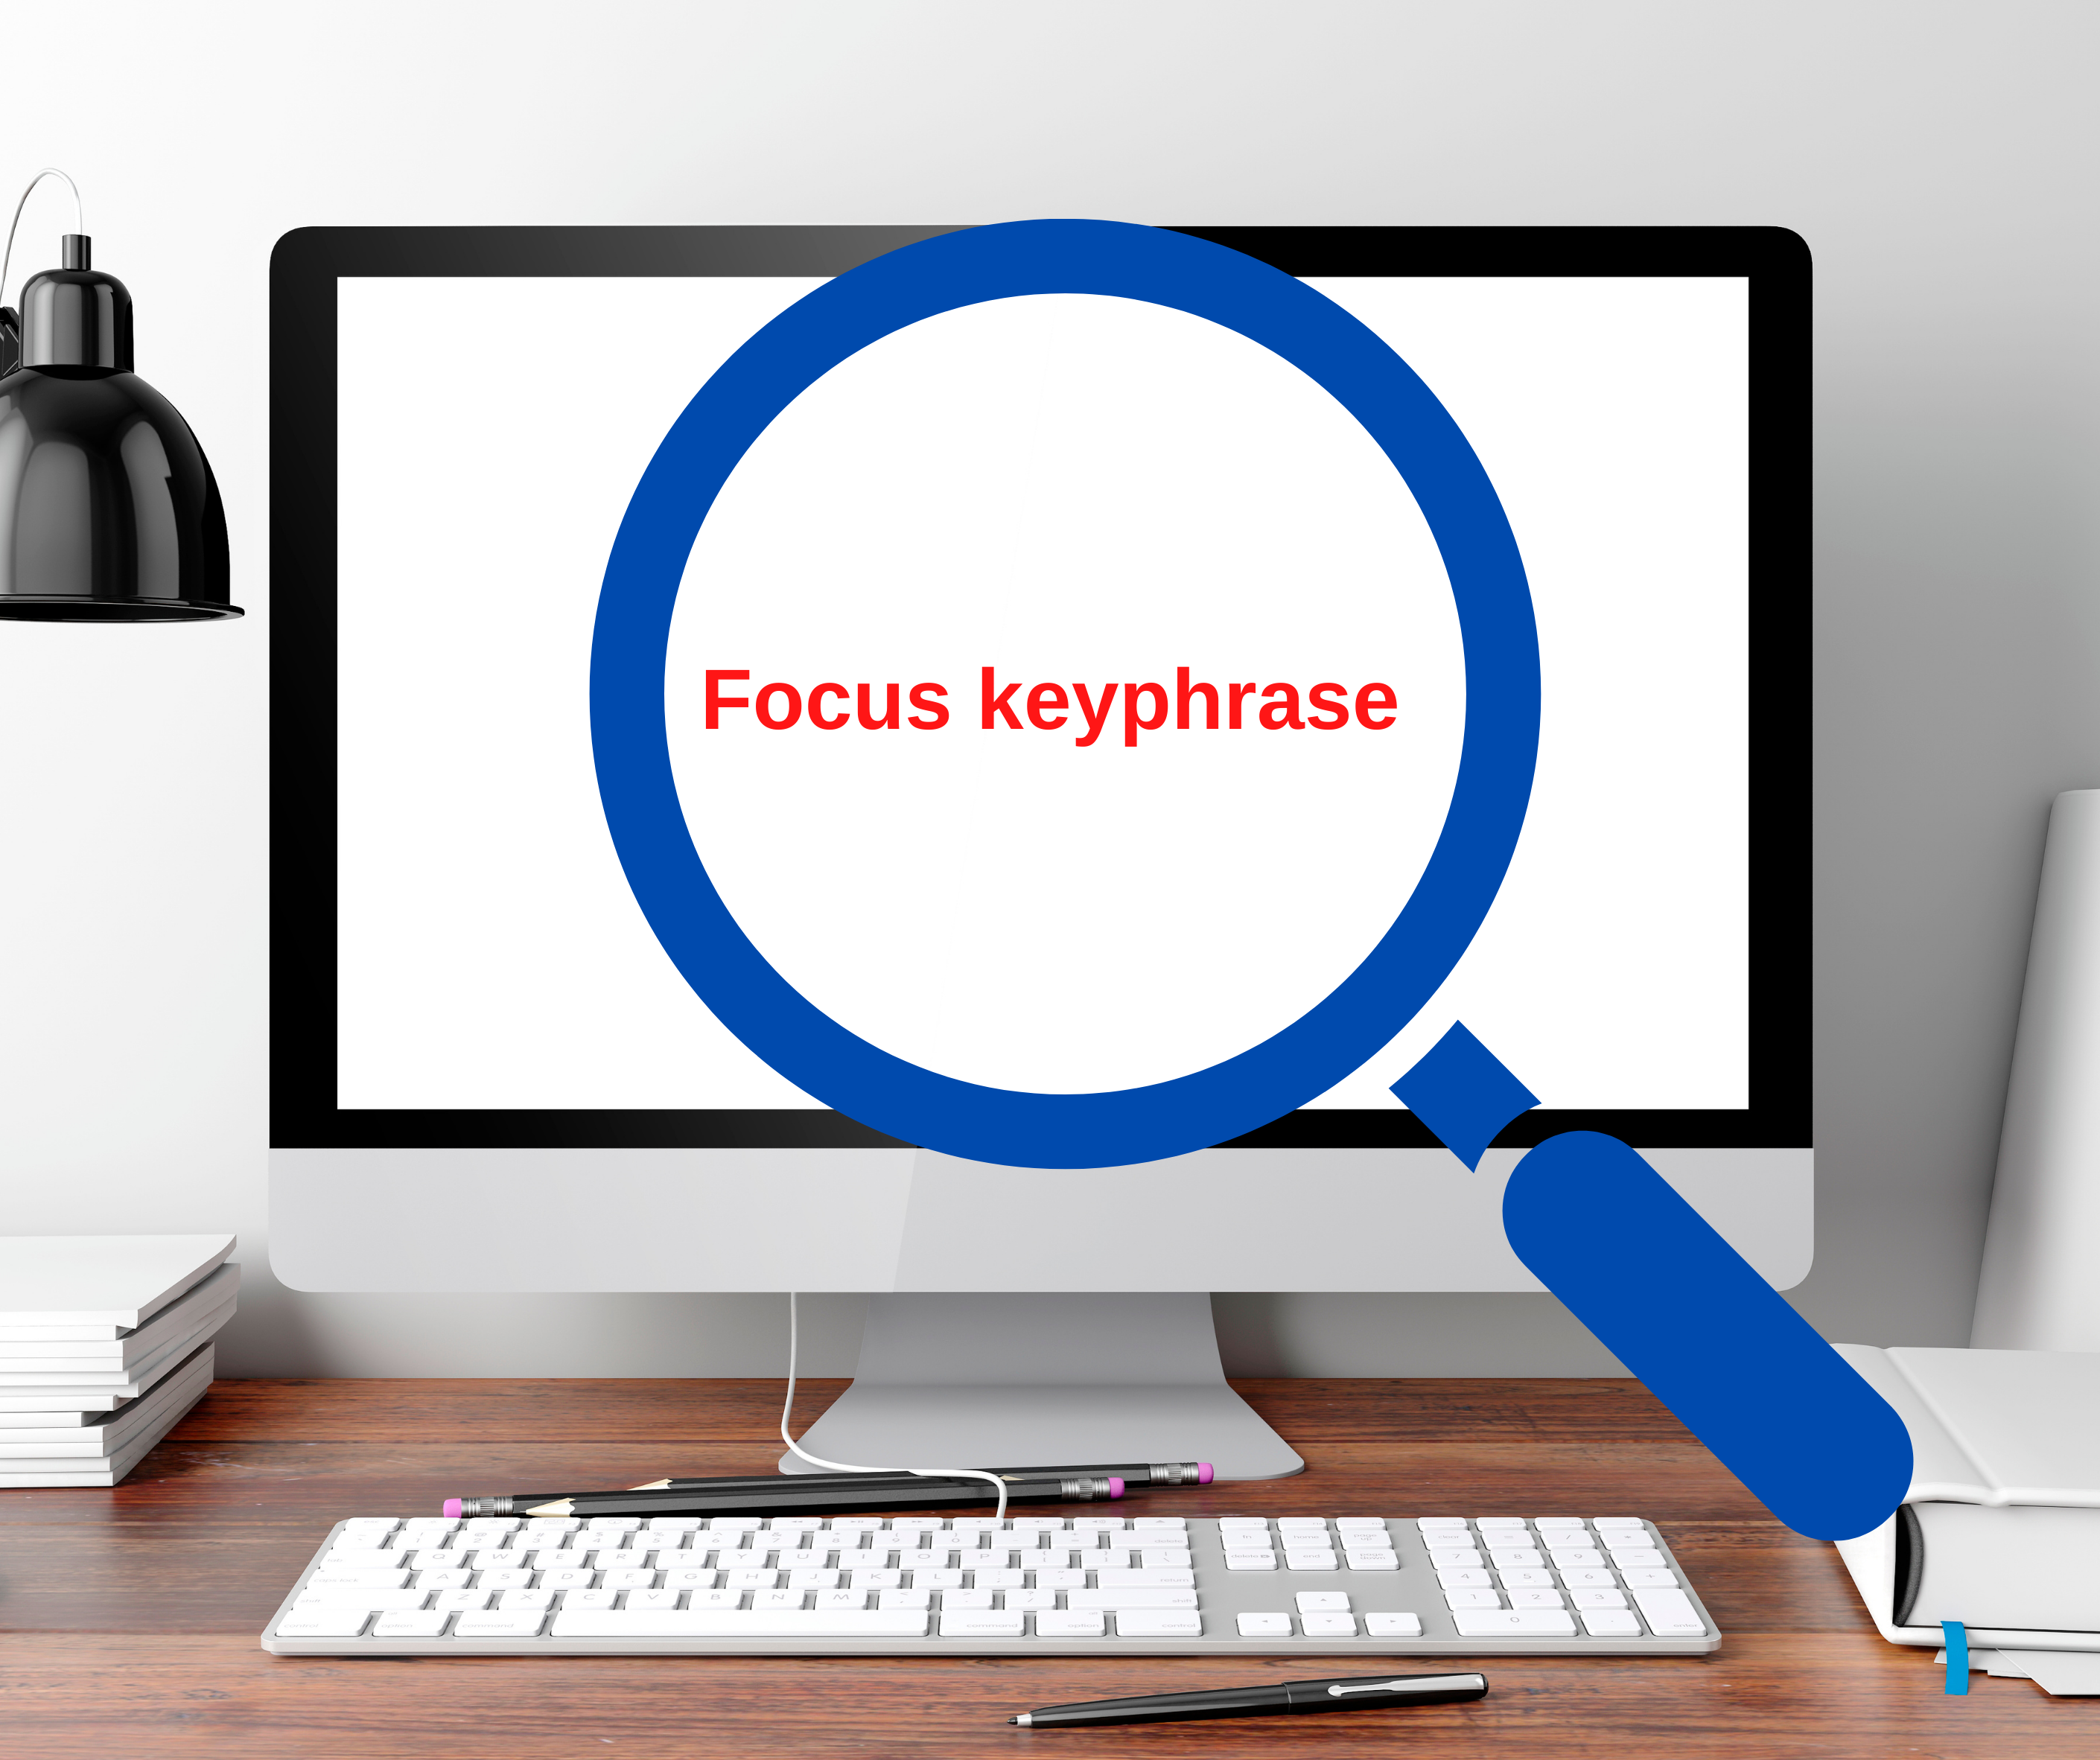 Focus keyphrase